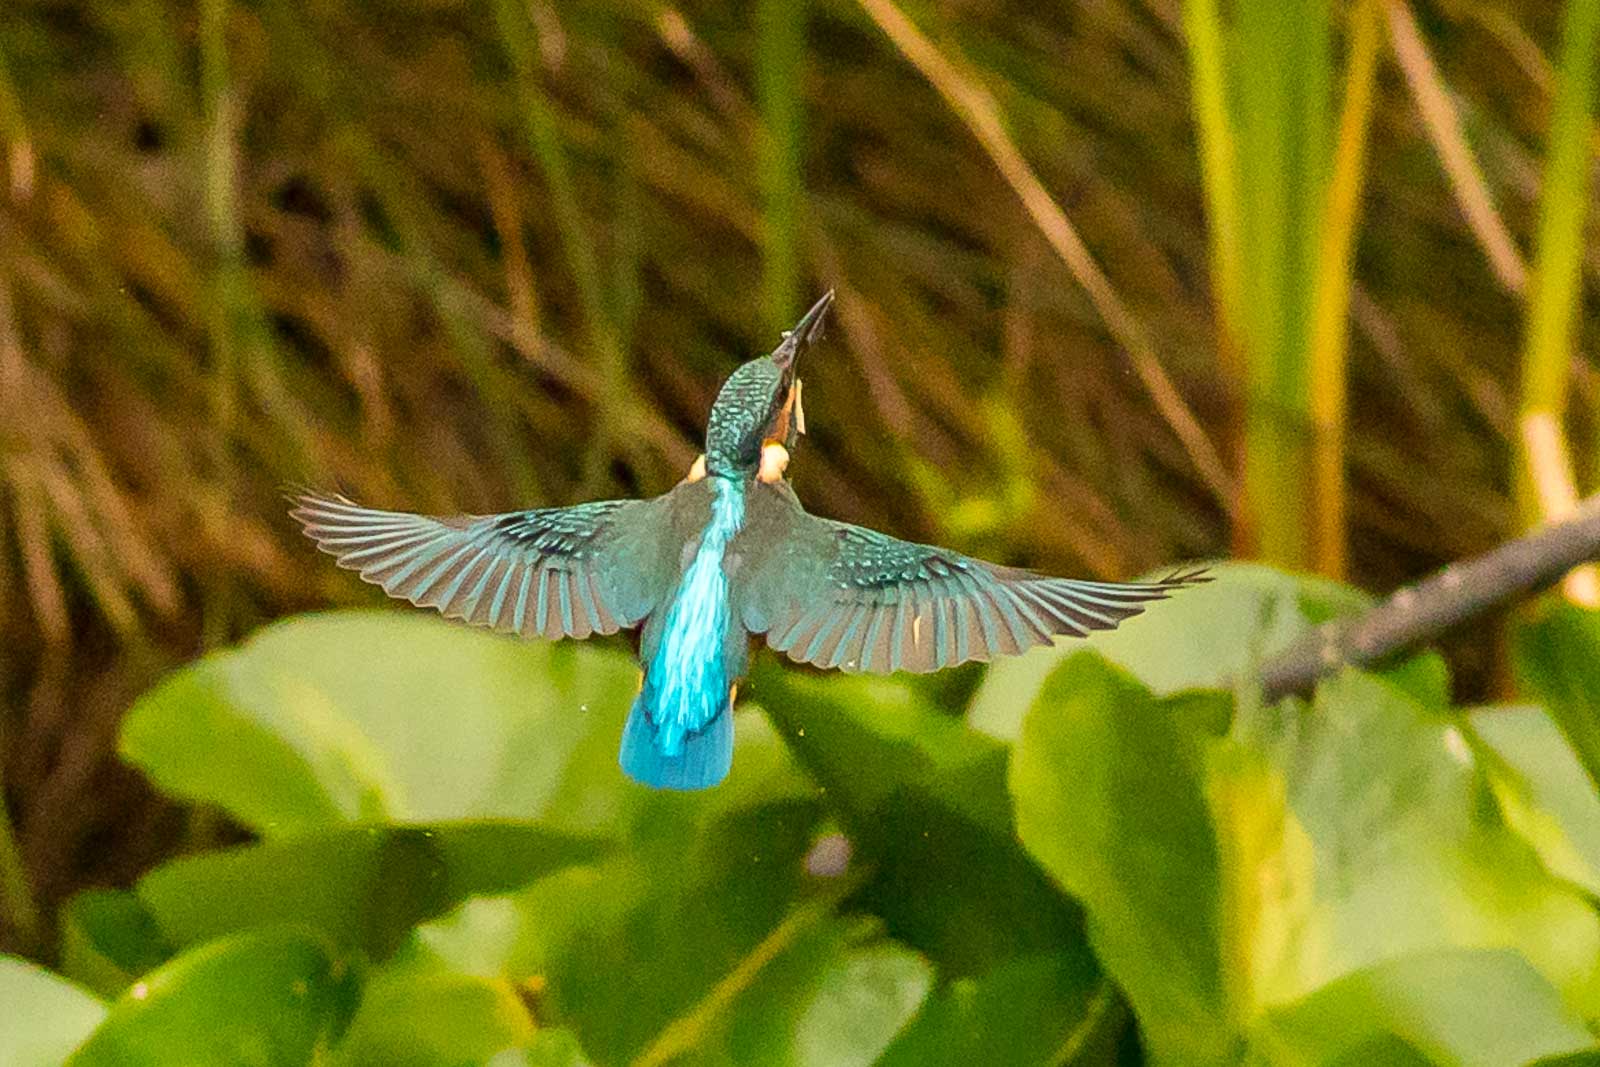 Common Kingfisher rising-7817.jpg